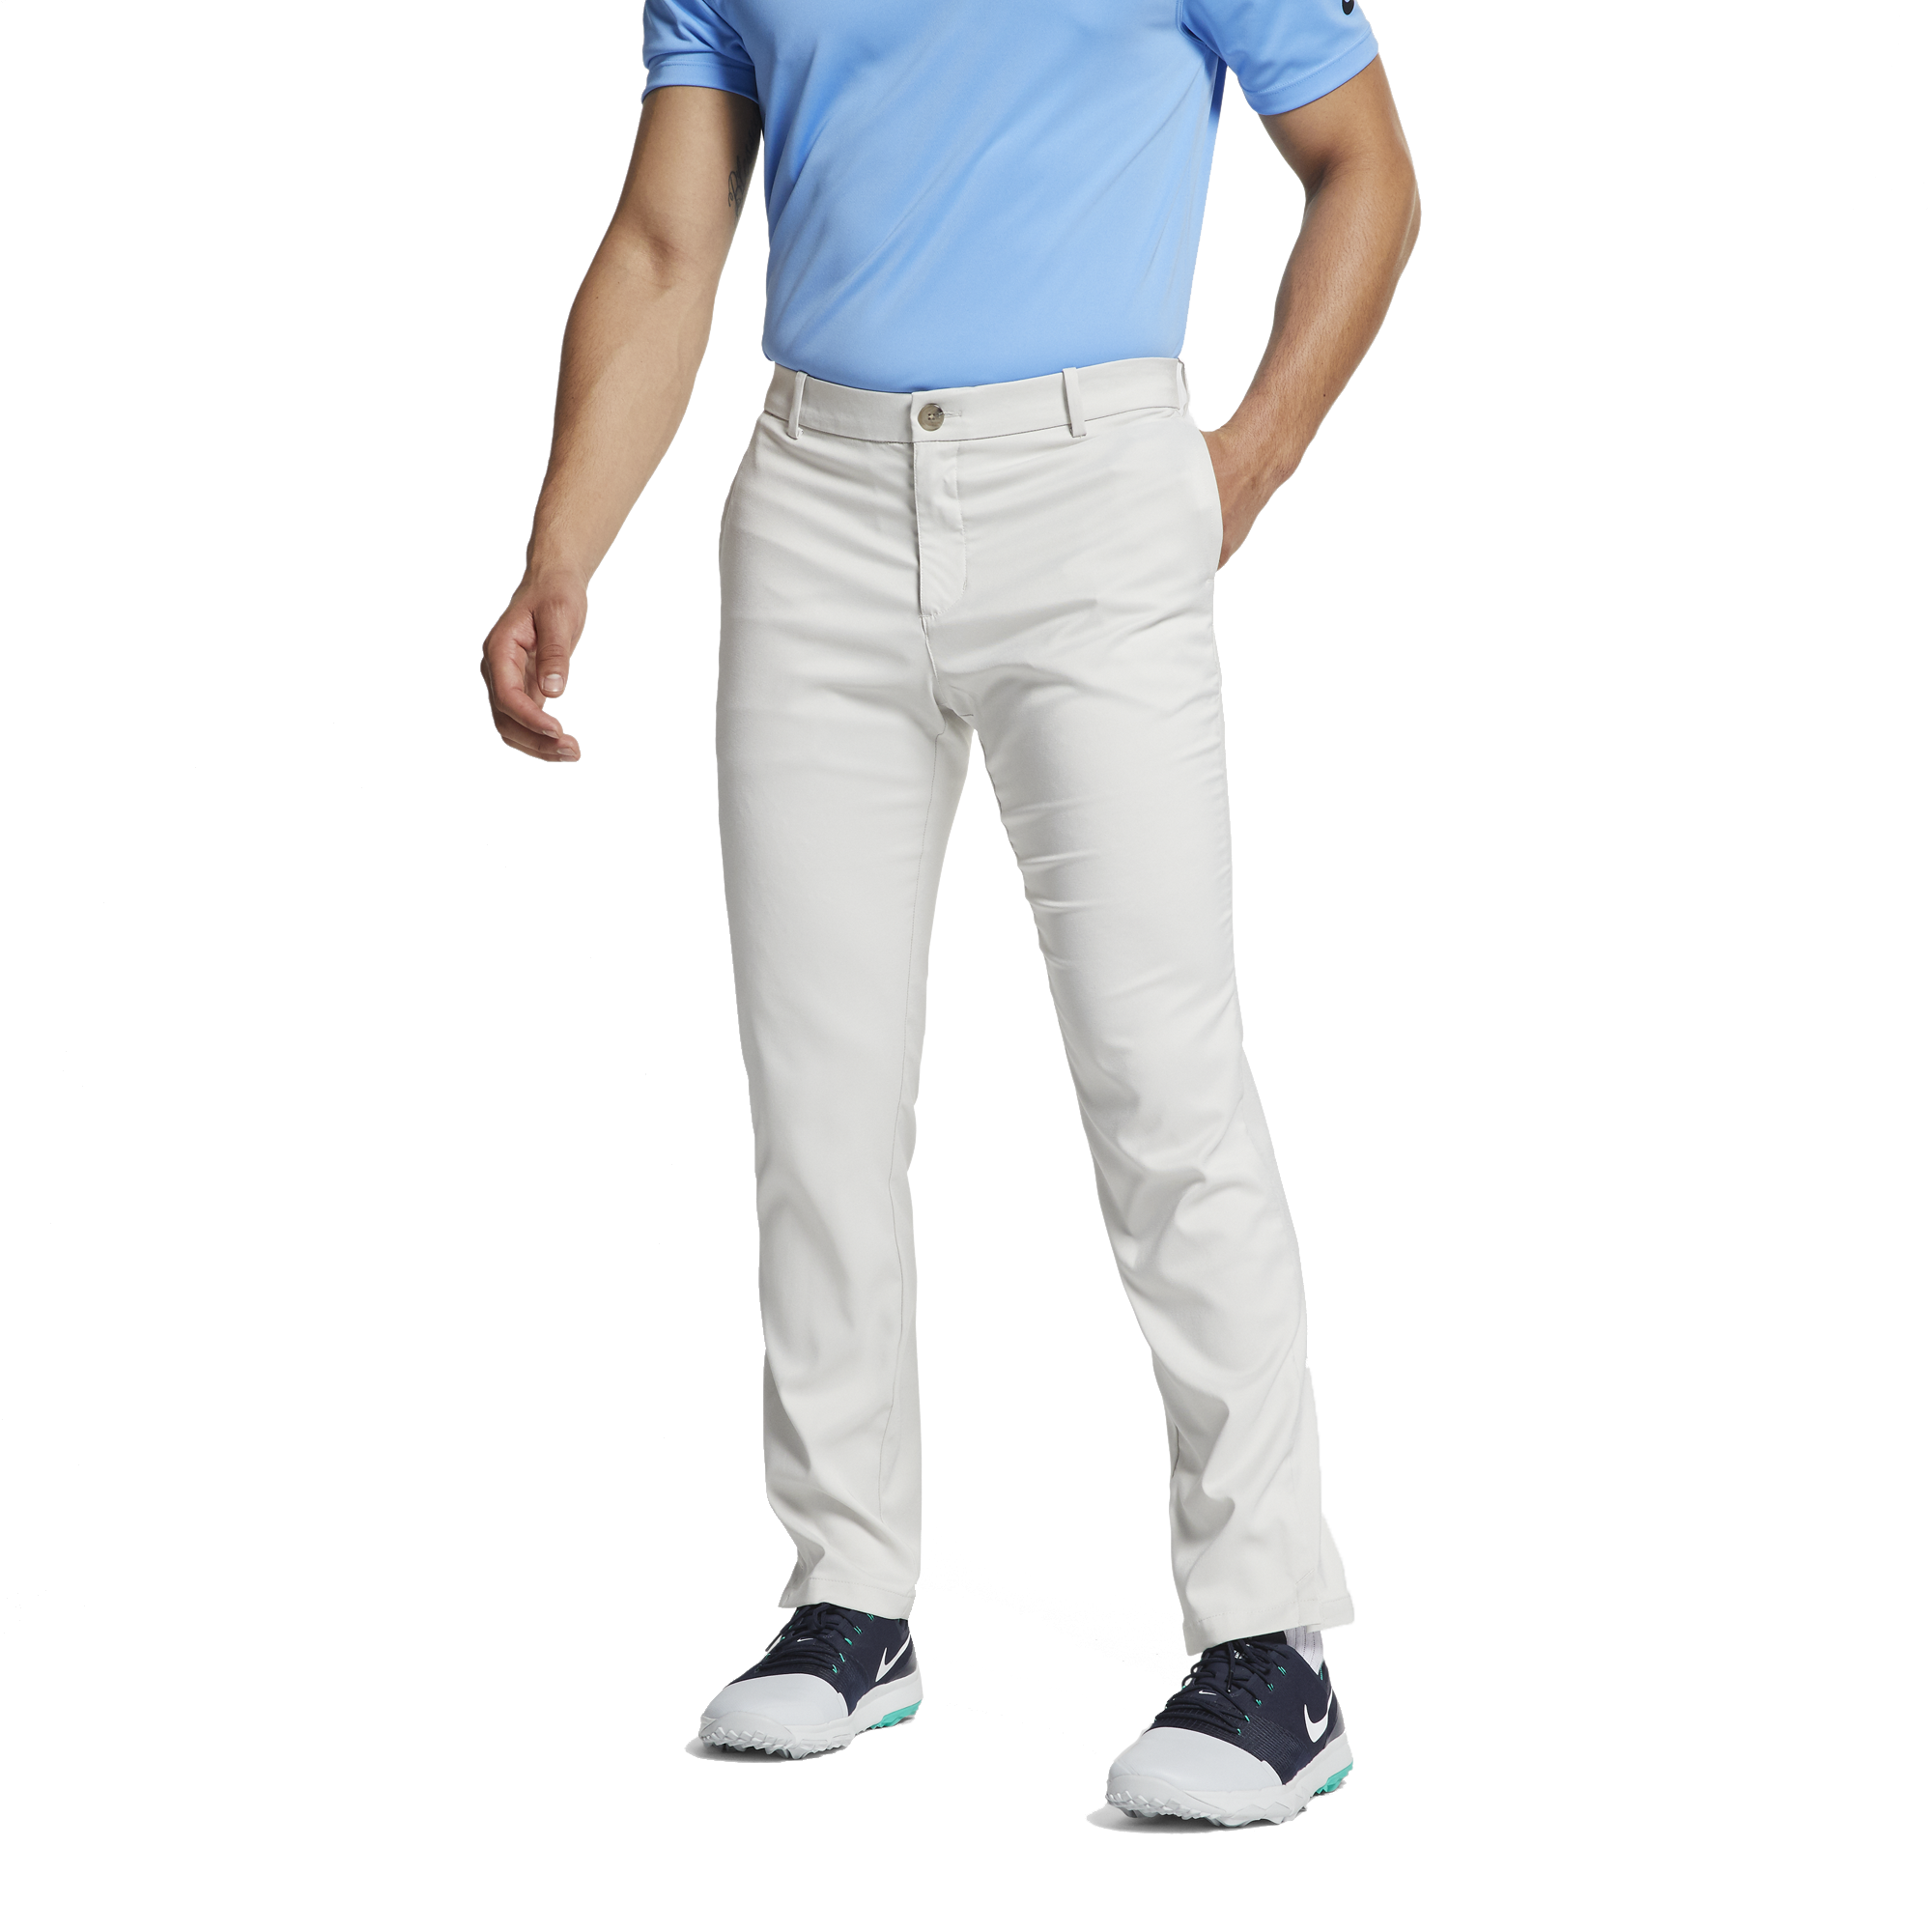 nike core flex golf pants